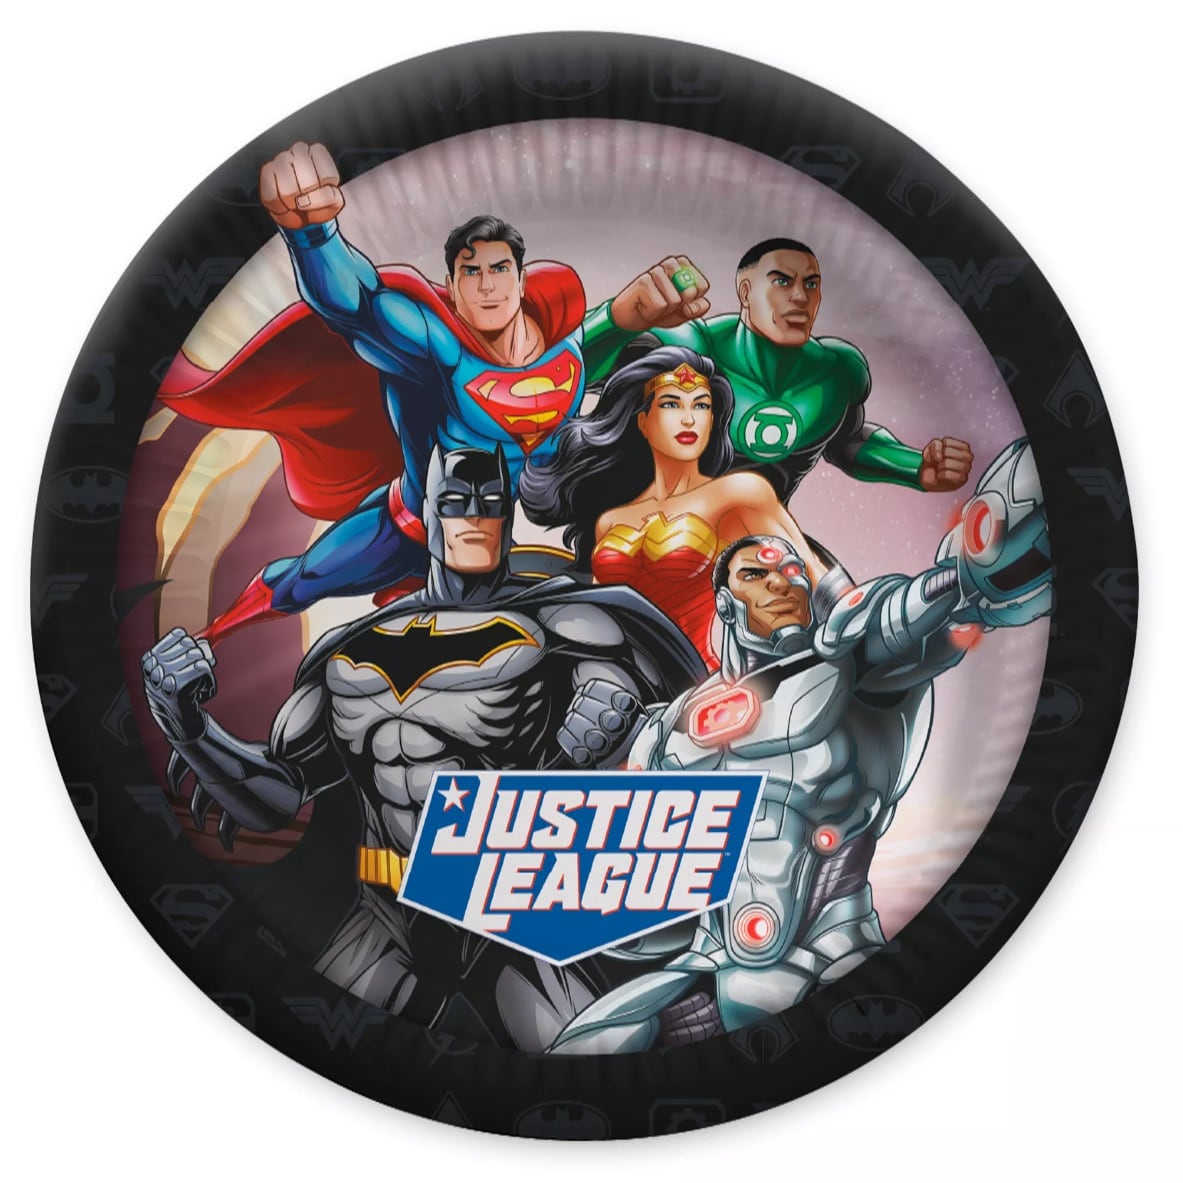 Justice League - Tallerkener 10 stk.